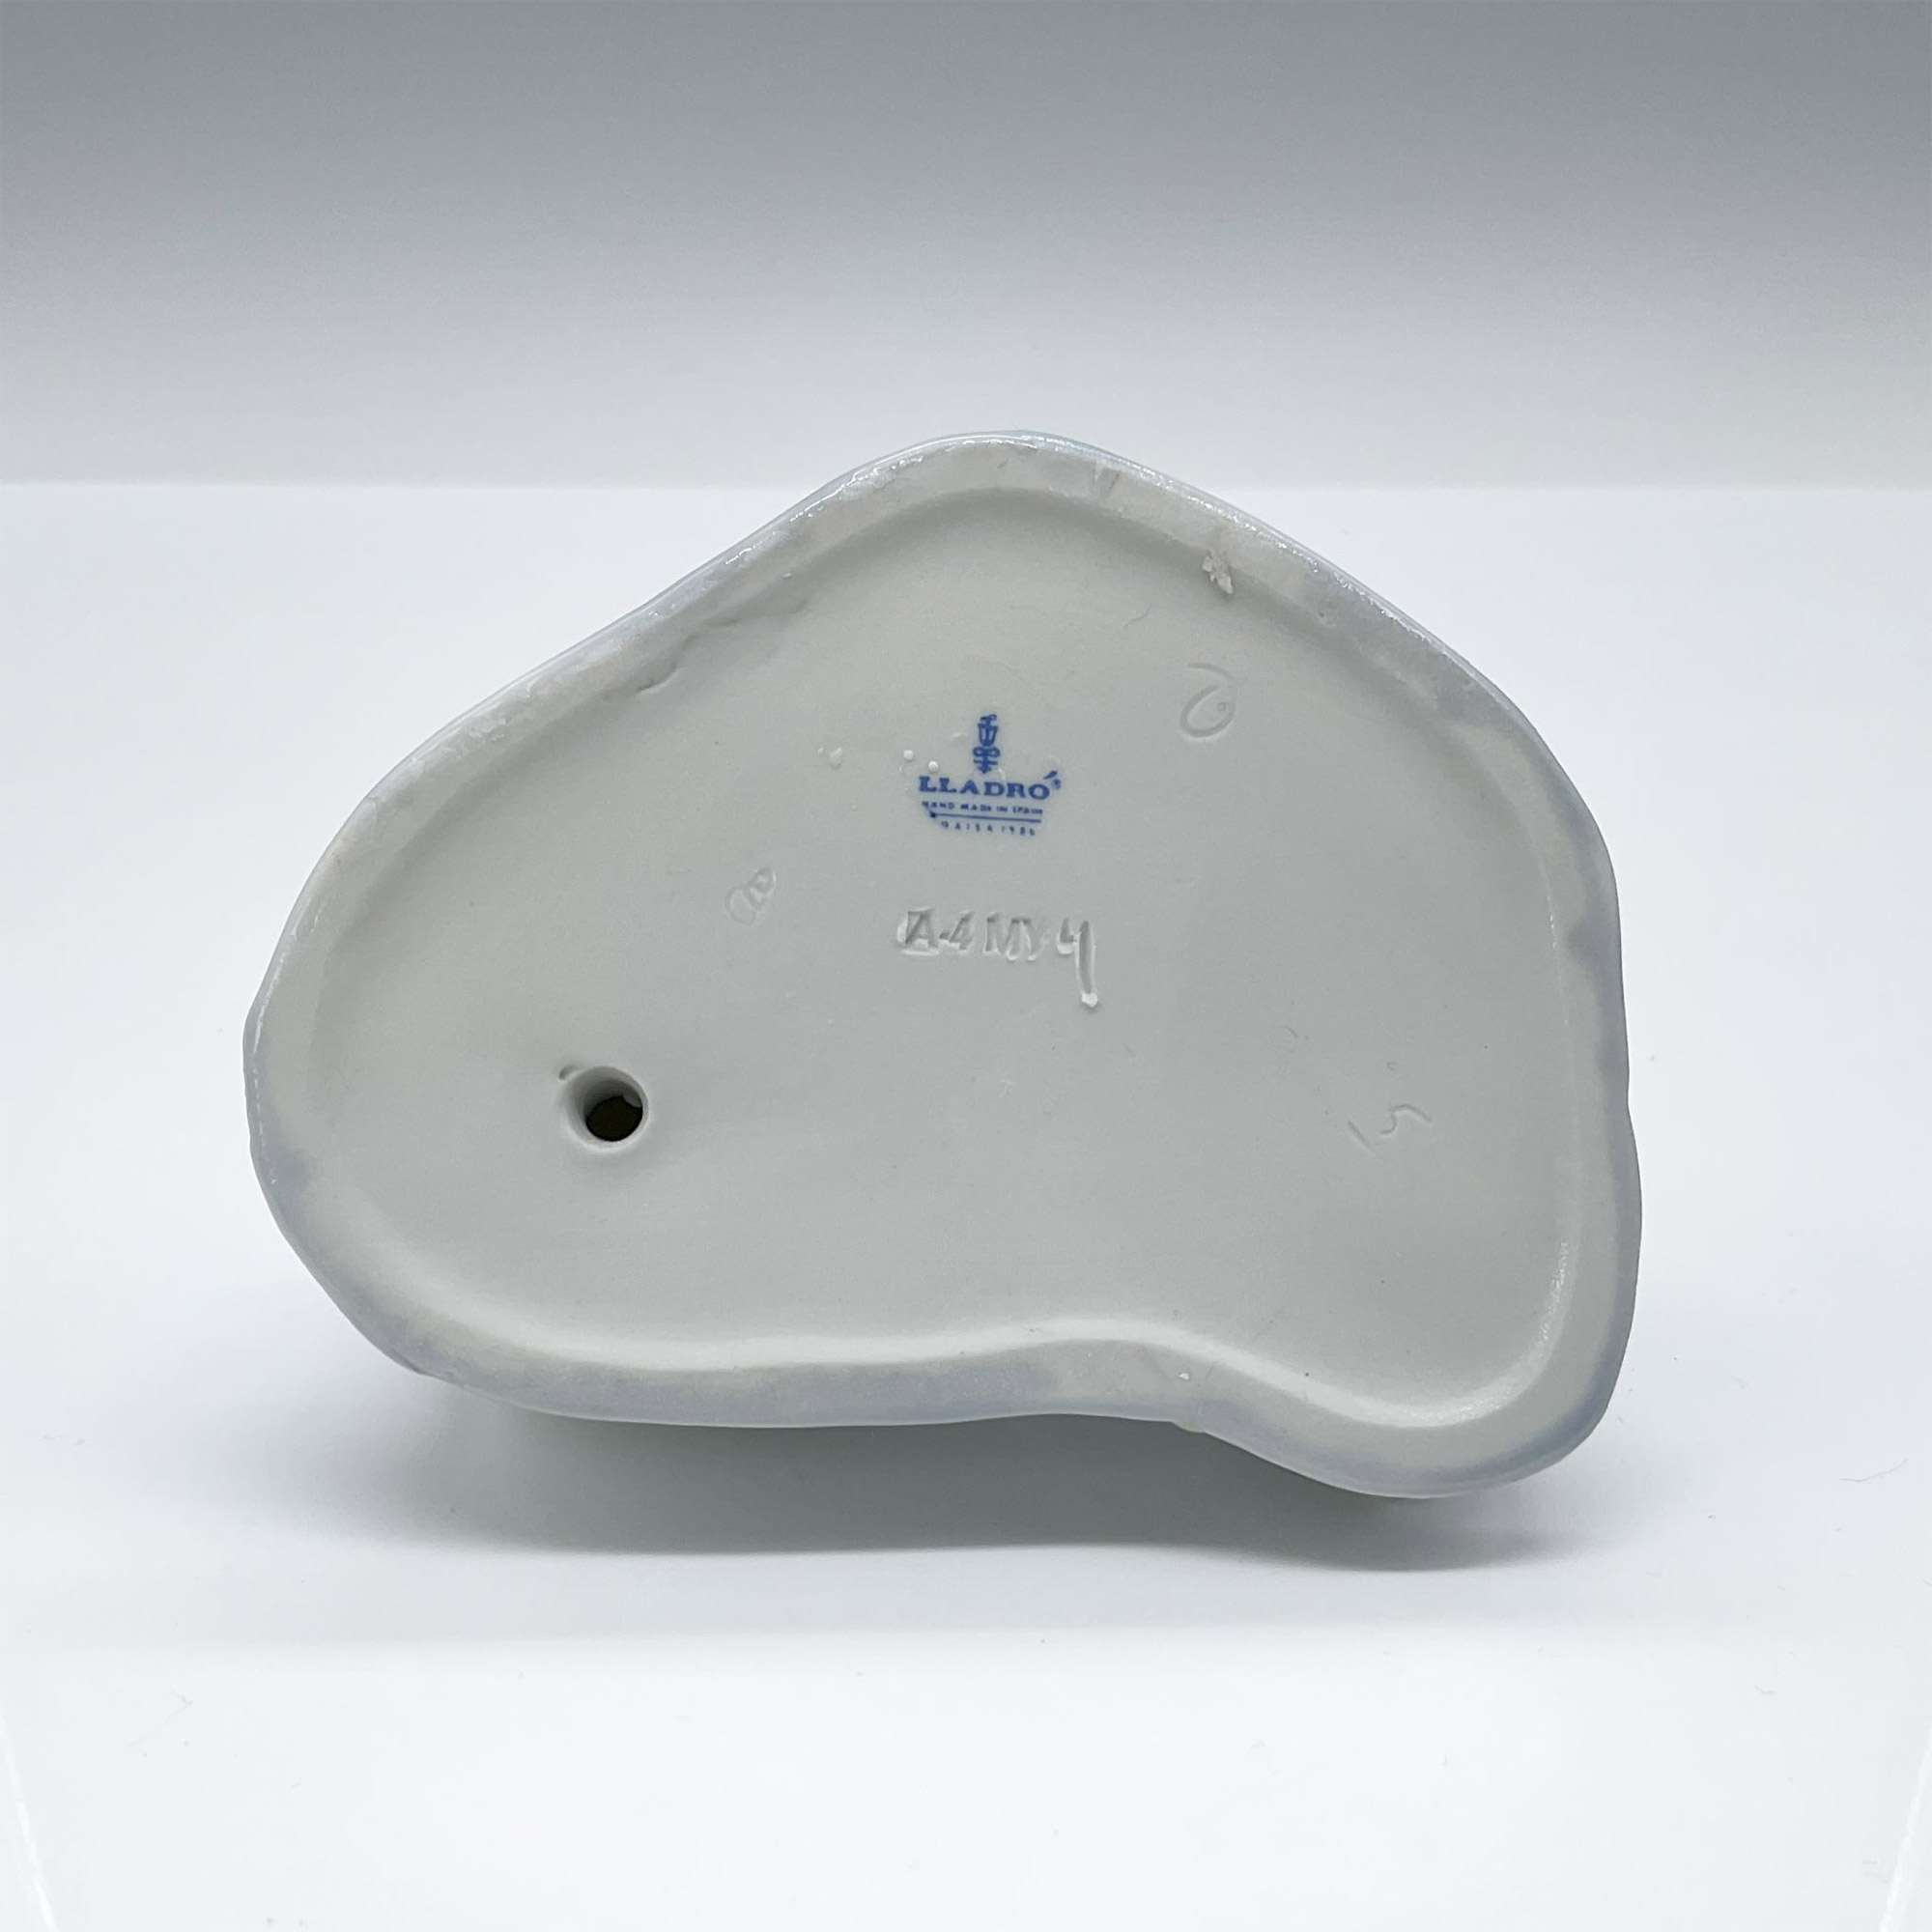 Miniature Polar Bear 1005434 - Lladro Porcelain Figurine - Image 3 of 3